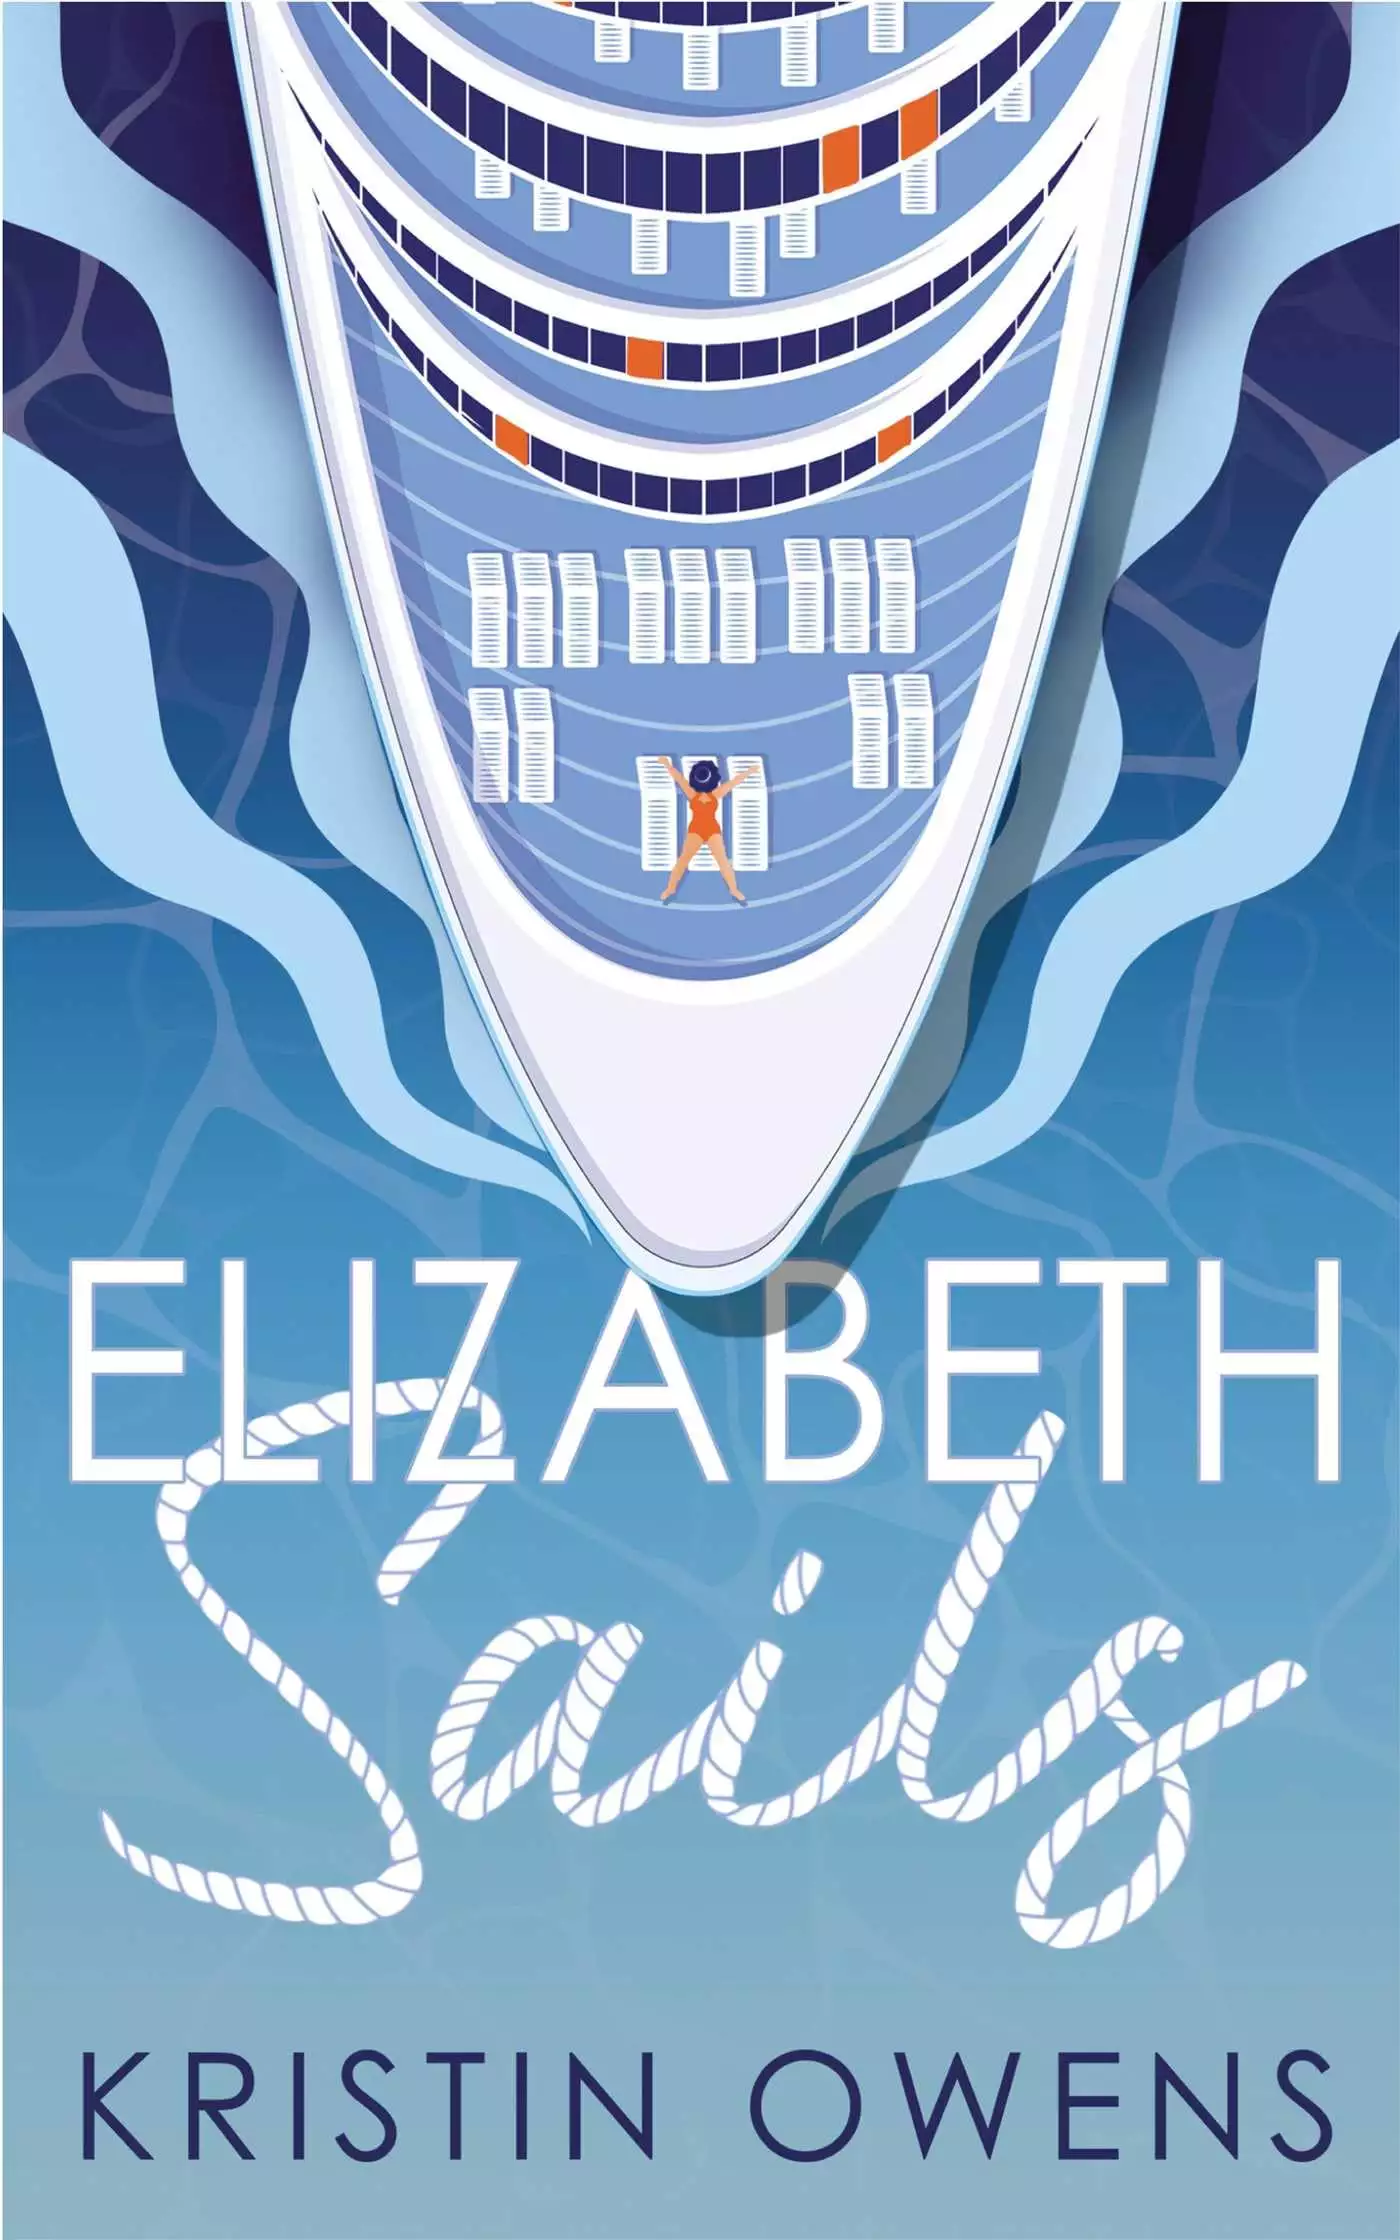 Elizabeth Sails